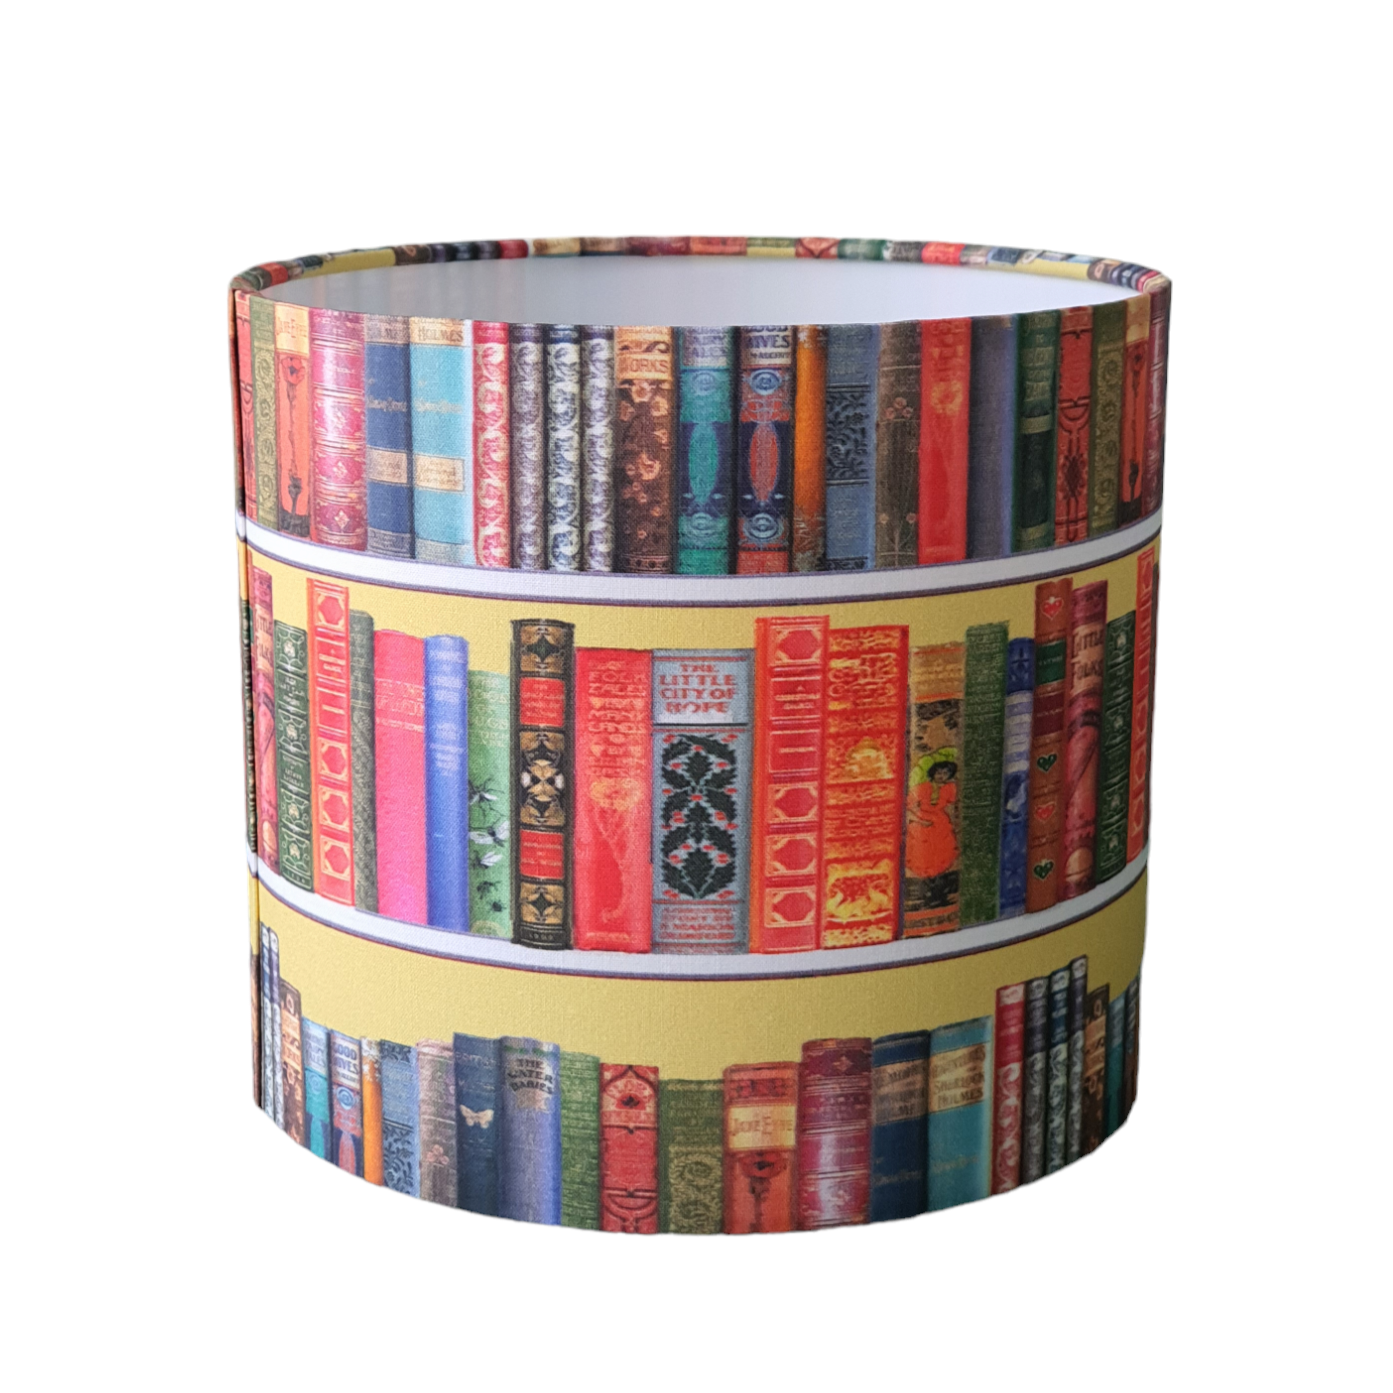 Handmade 20cm Drum Lampshade - Classic Books Fabric - Book Lovers Gift